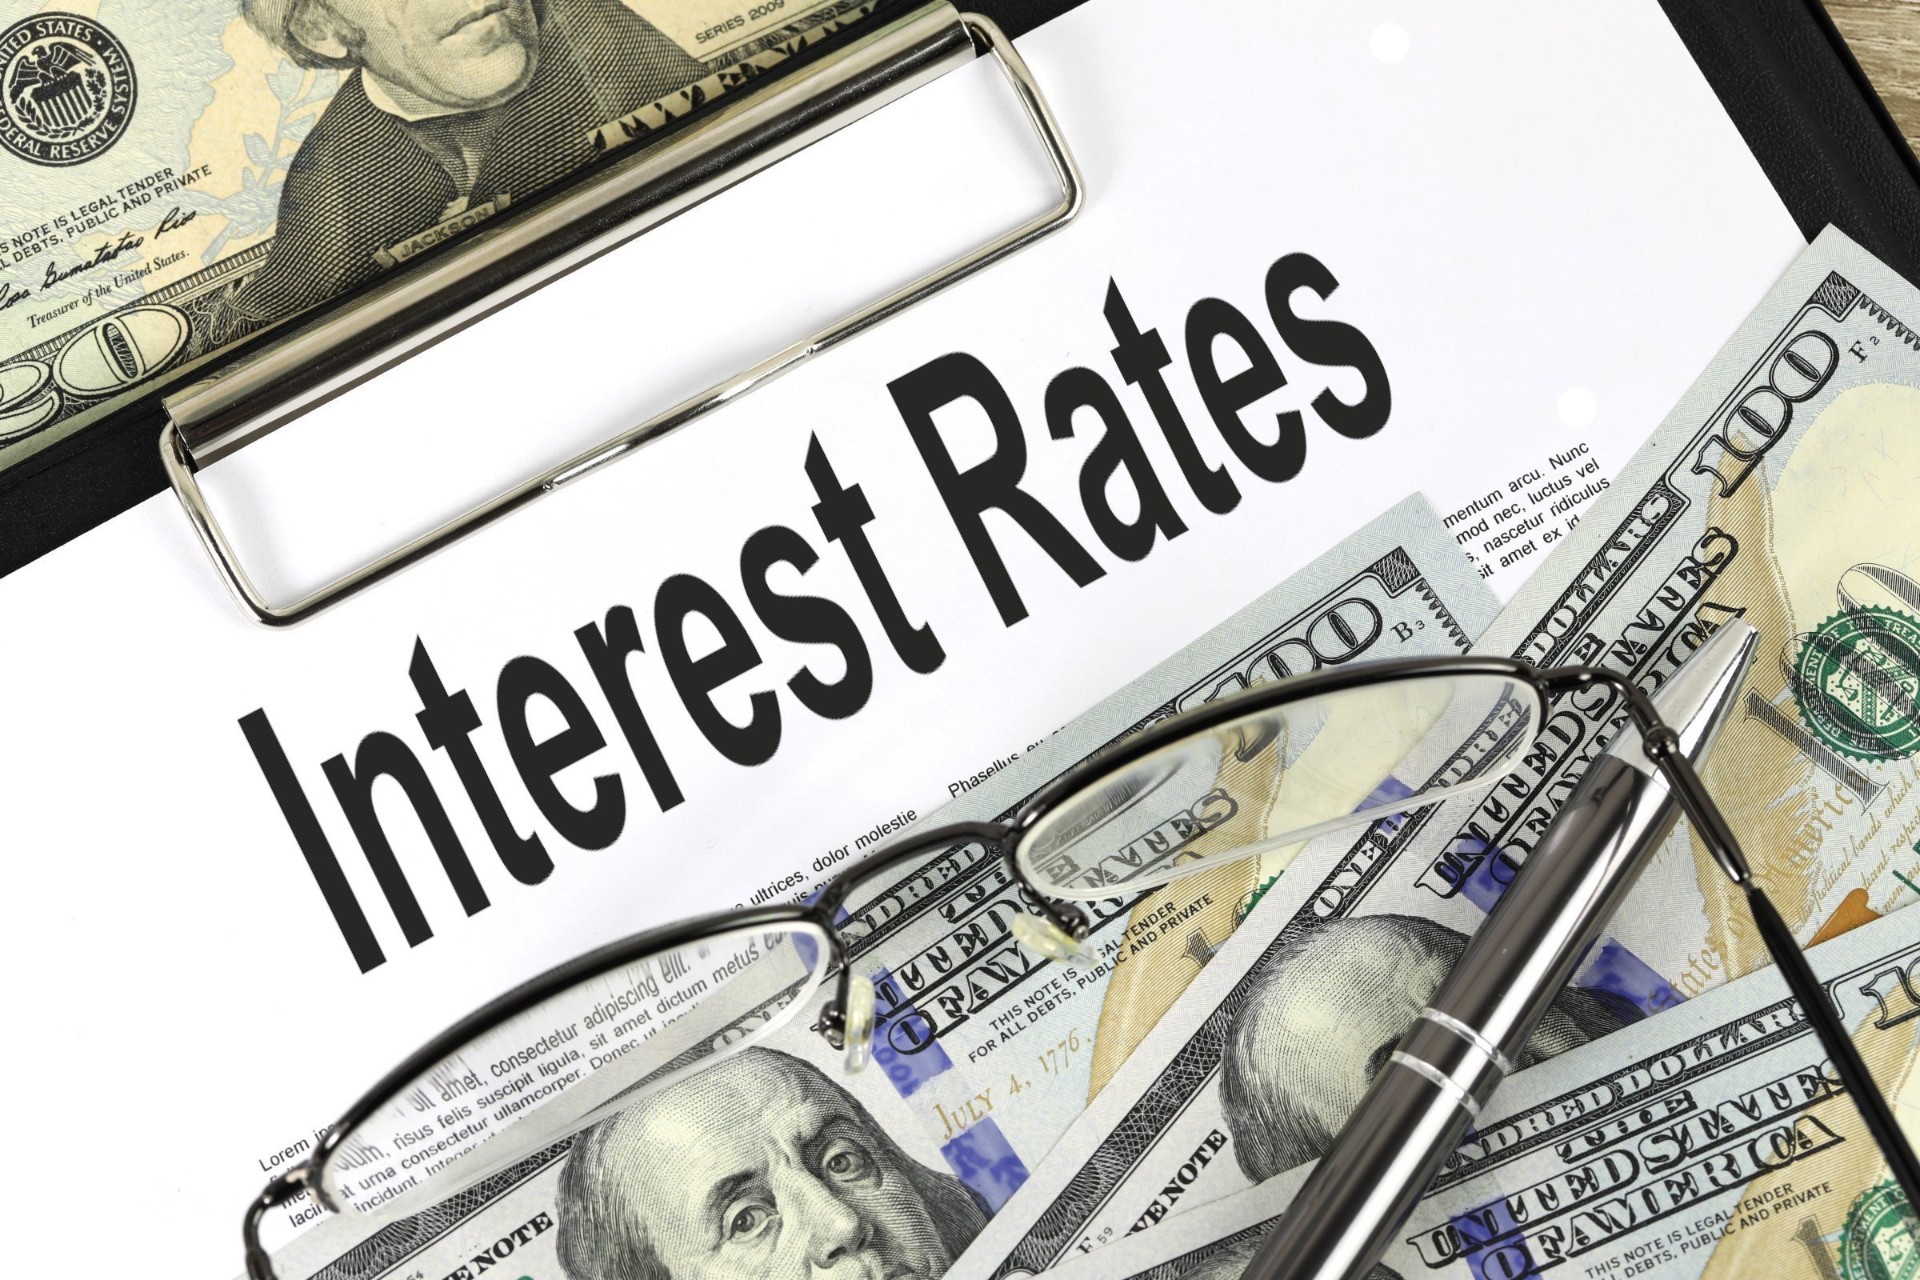 Texas Auto Center interest rates